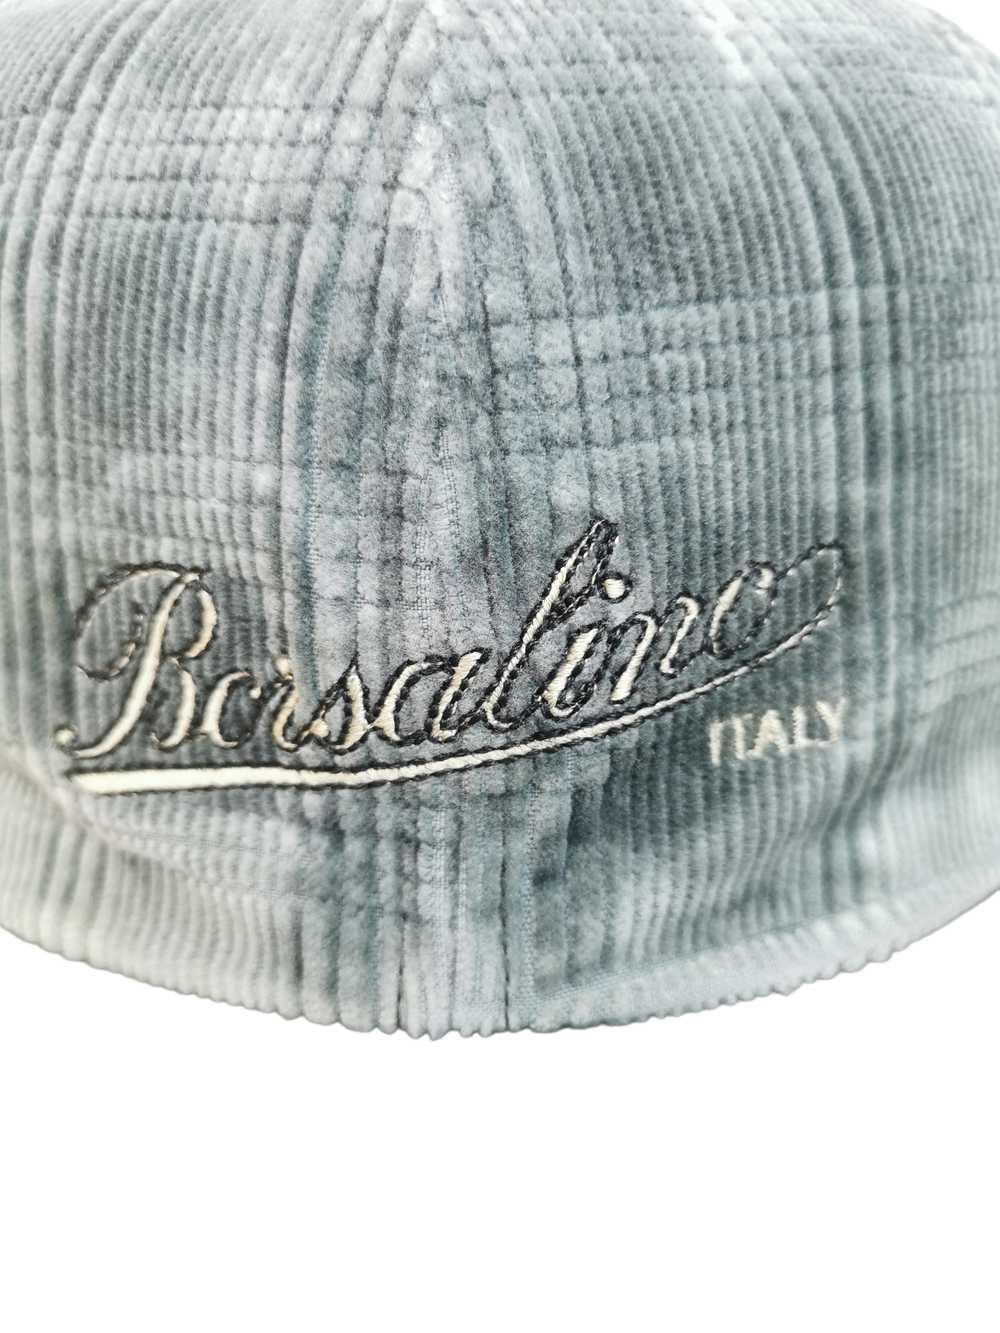 Borsalino - VINTAGE BORSALINO LUXURY DESIGNER HAT… - image 2